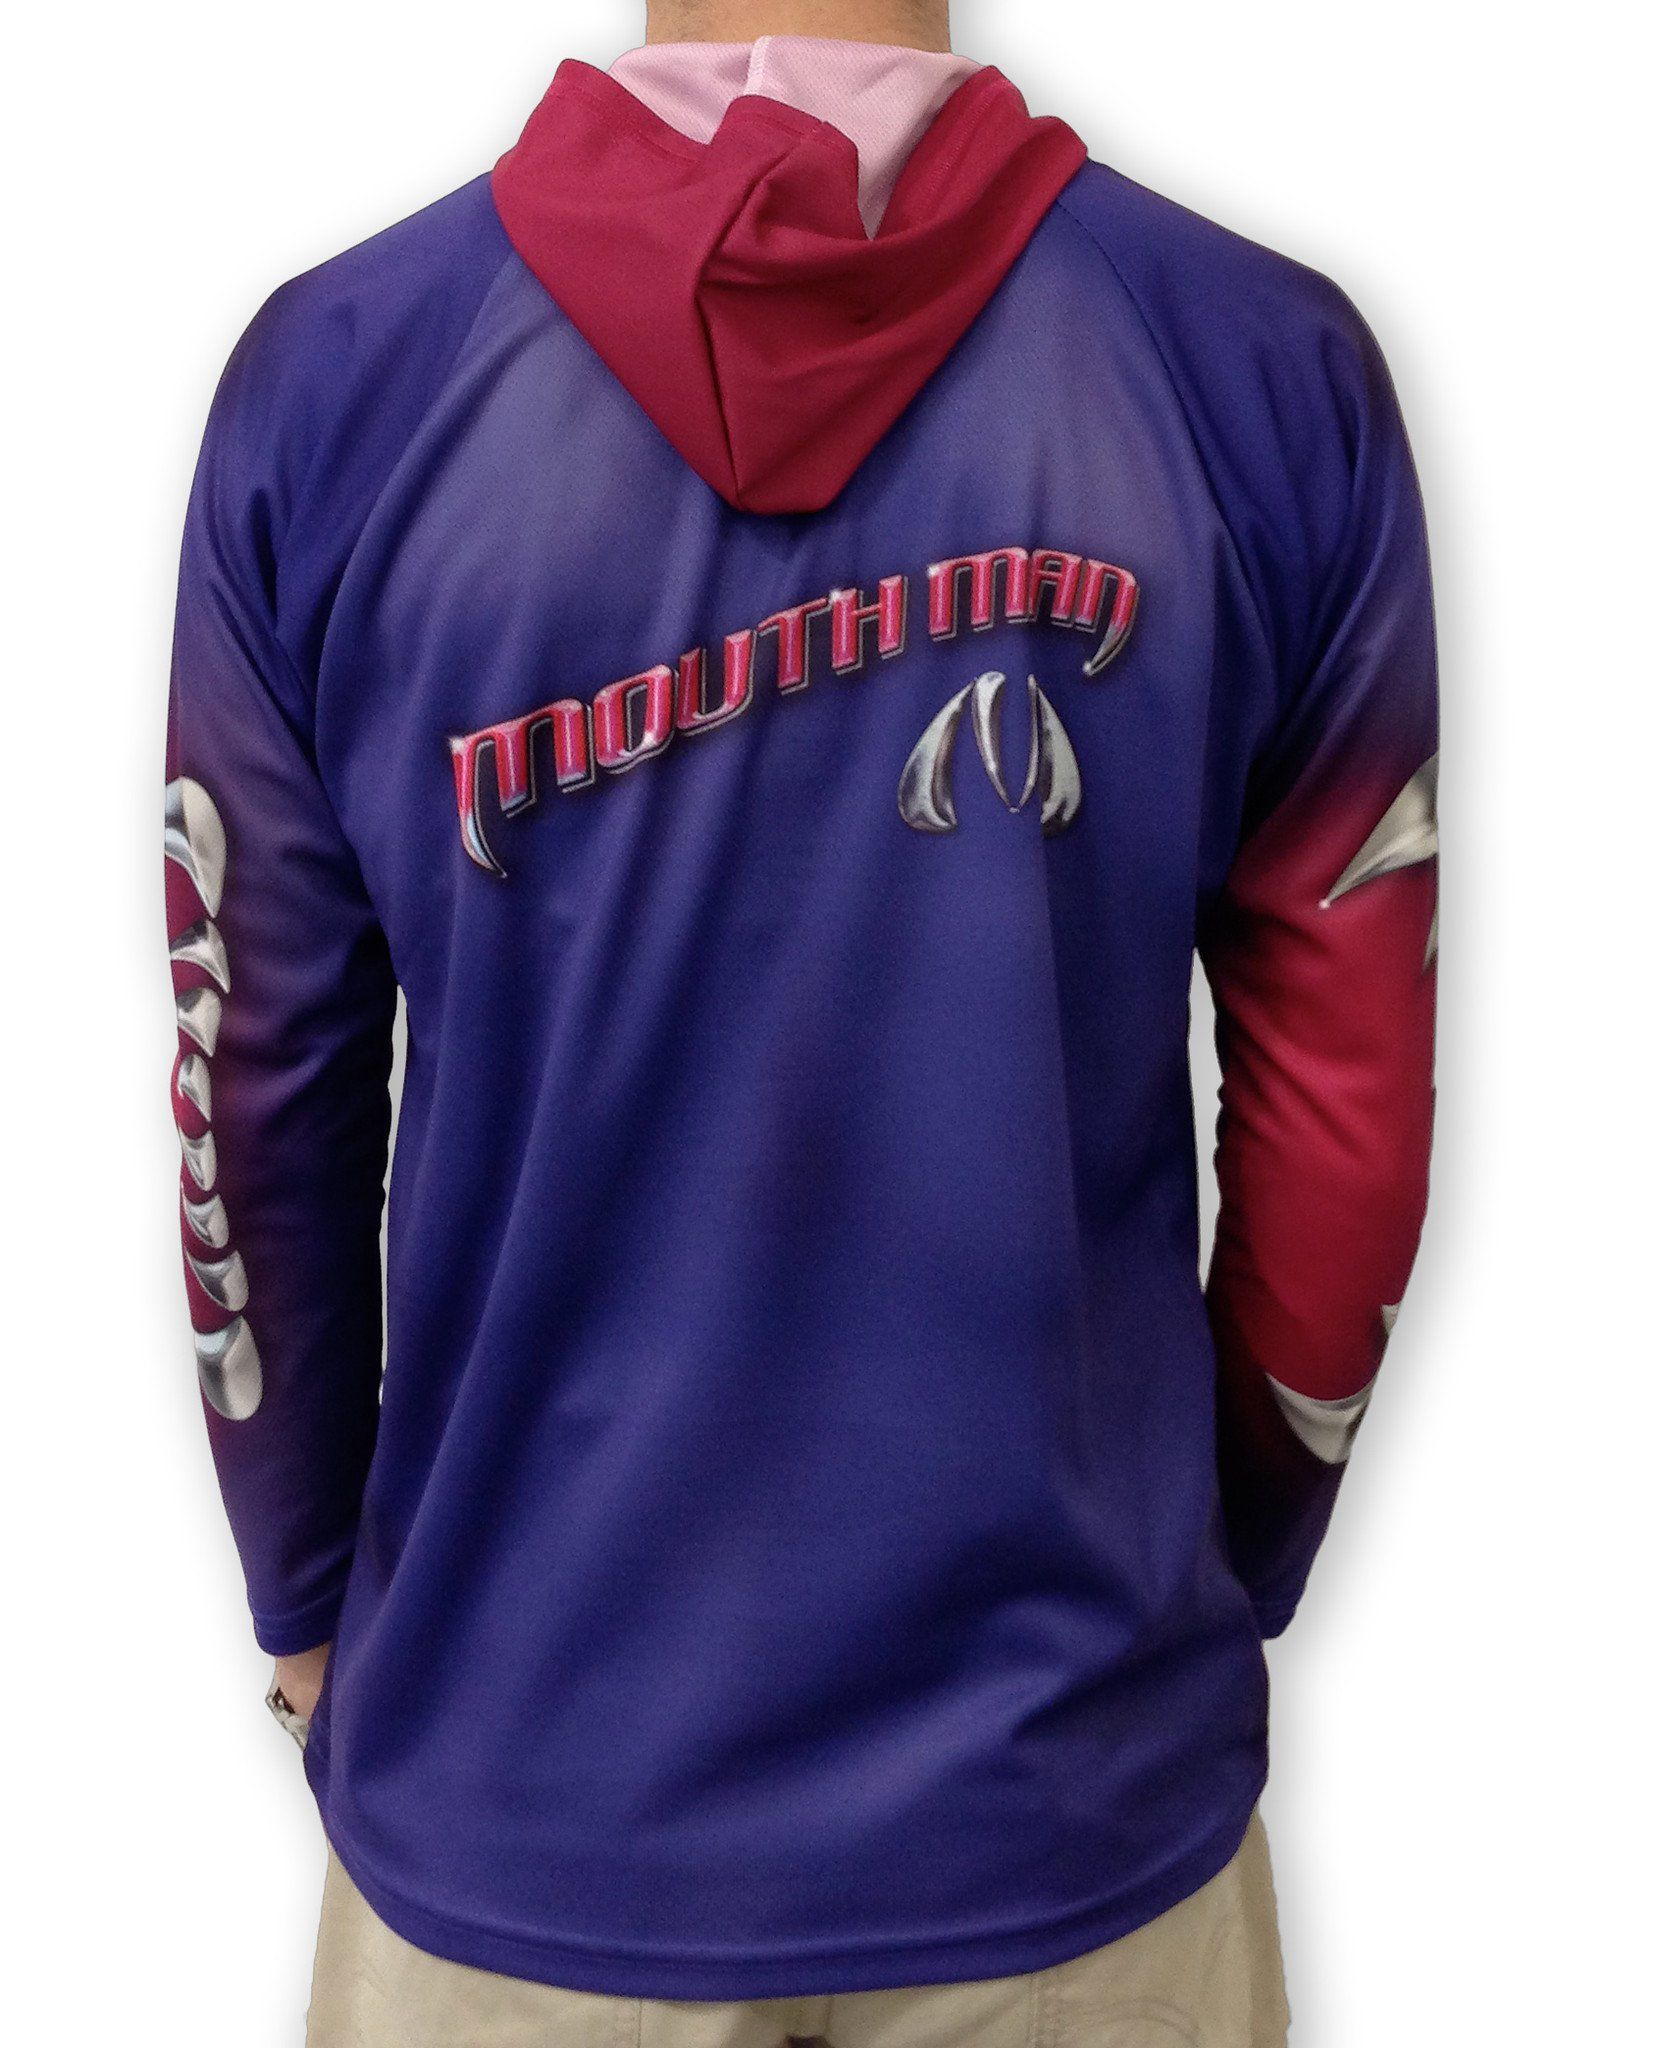 SUPERHERO Hoodie Sport Shirt by MOUTHMAN® Kid's Clothing 